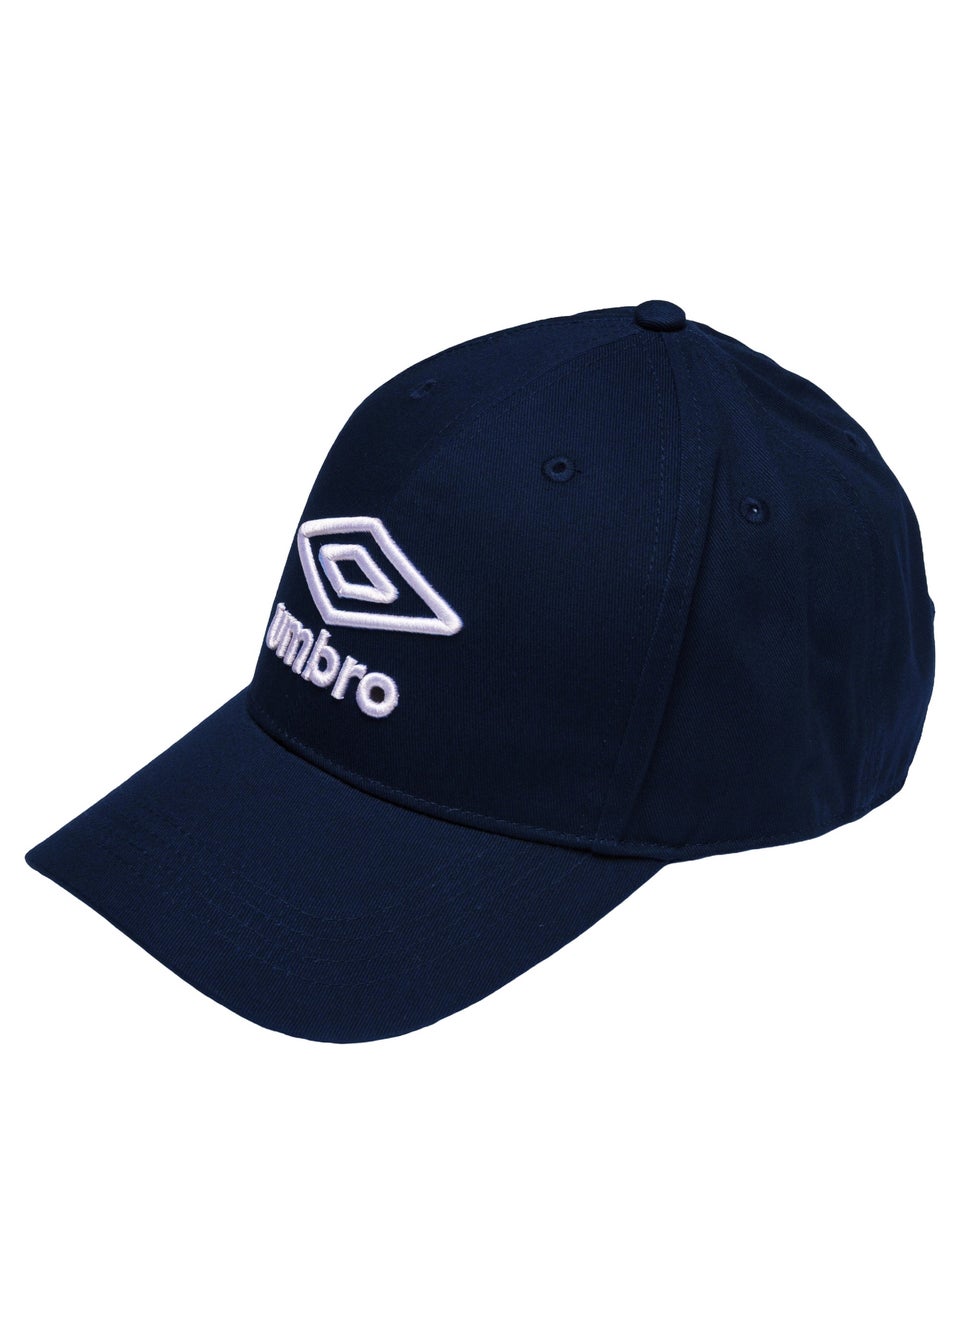 Umbro Navy/White Logo Cap